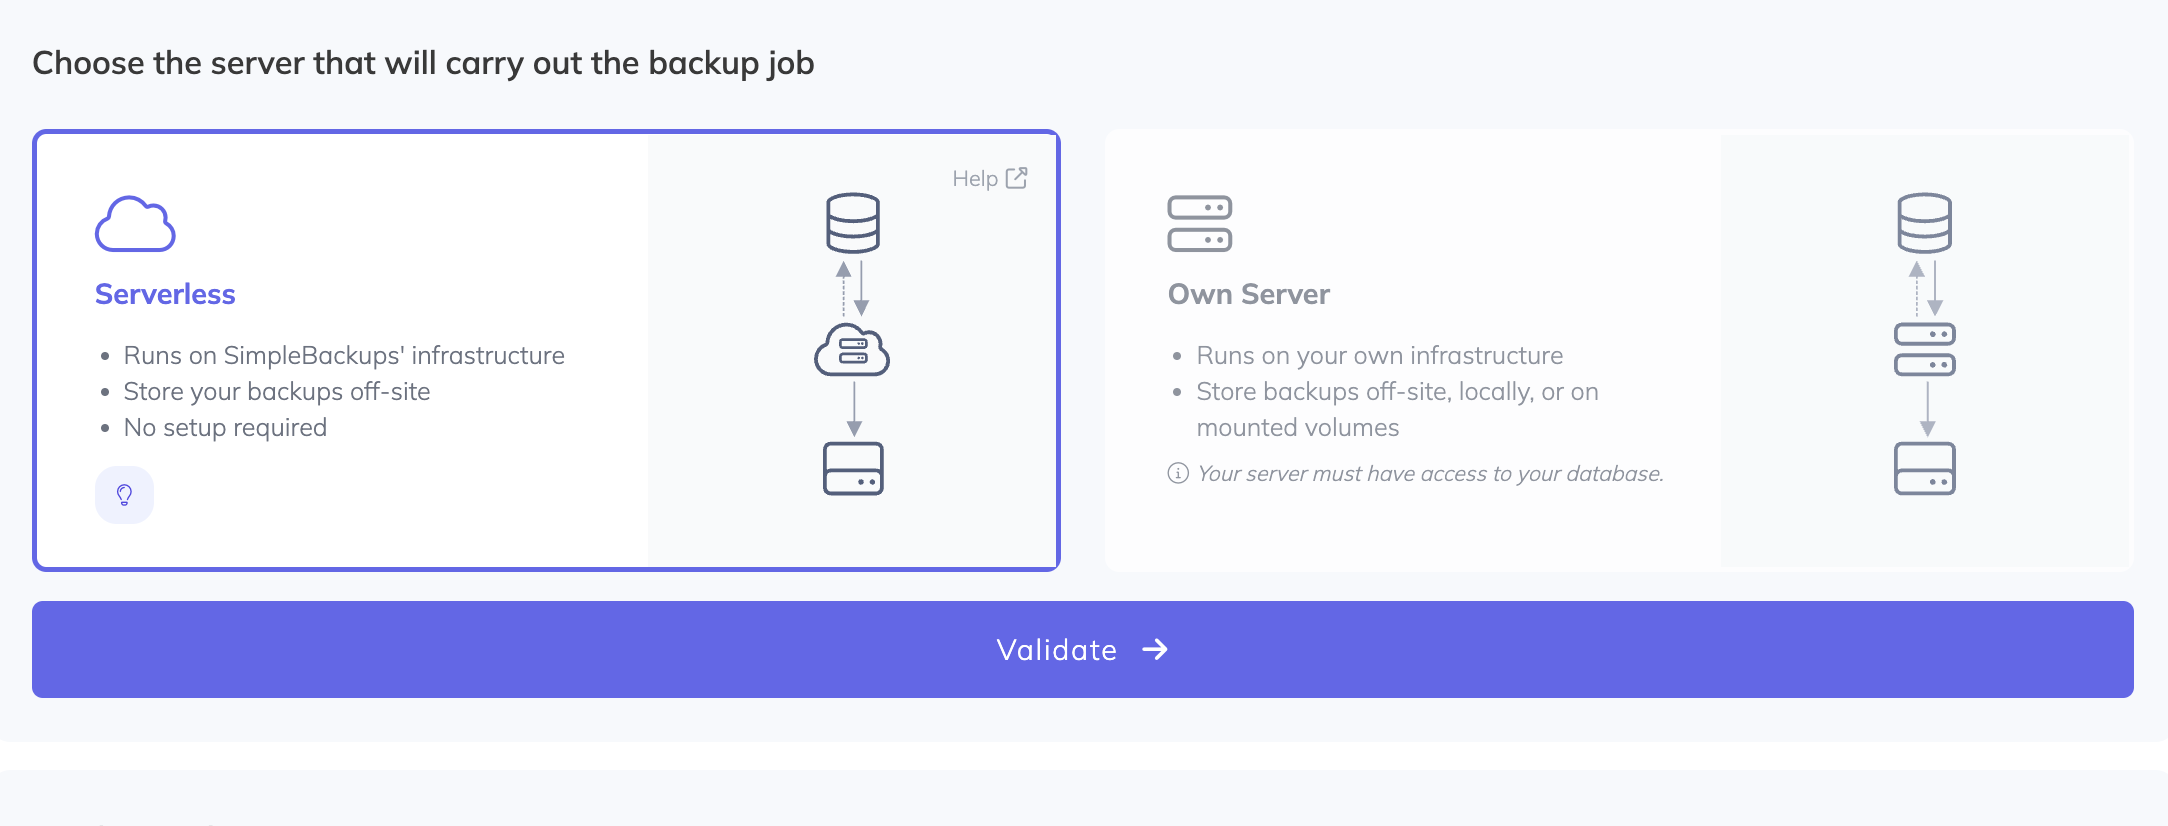 how to choose a backup server on simplebackups